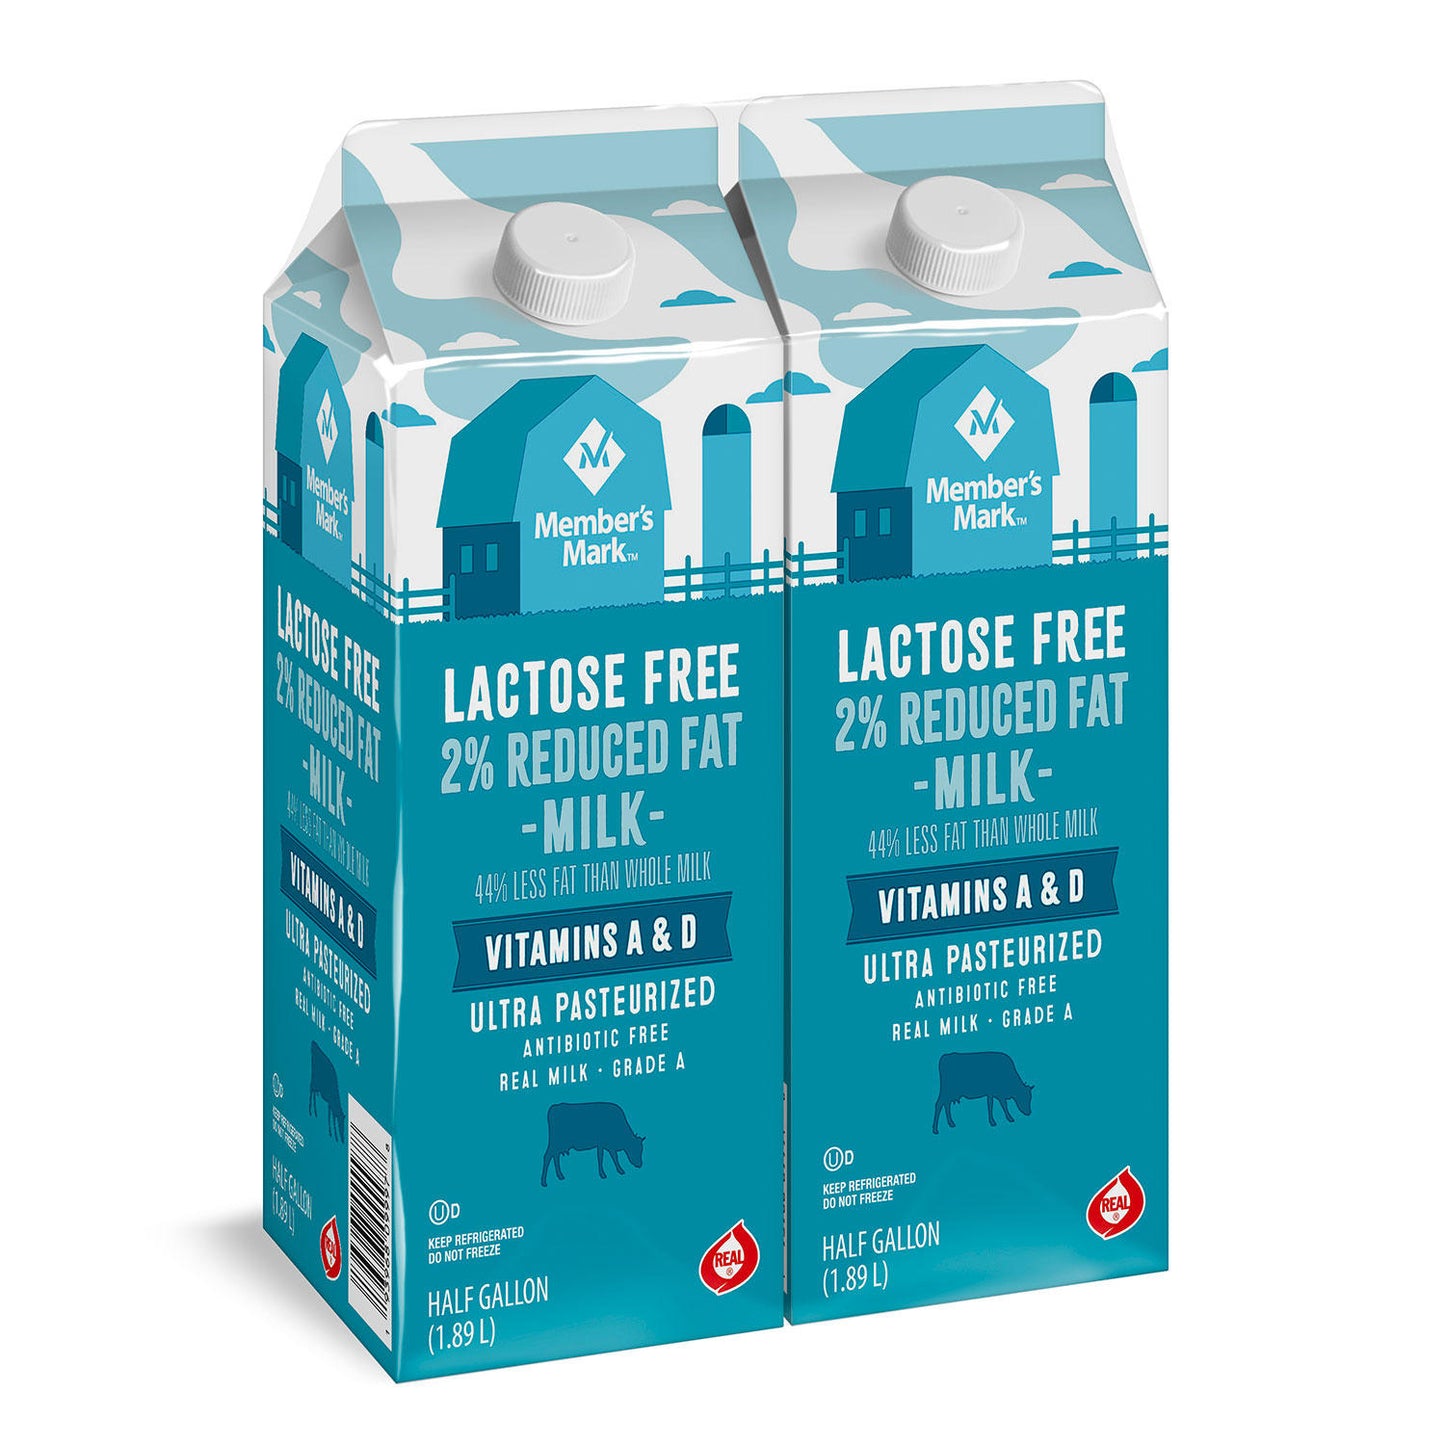 Member's Mark Lactose Free 2% Reduced Fat Milk (2 pk.)